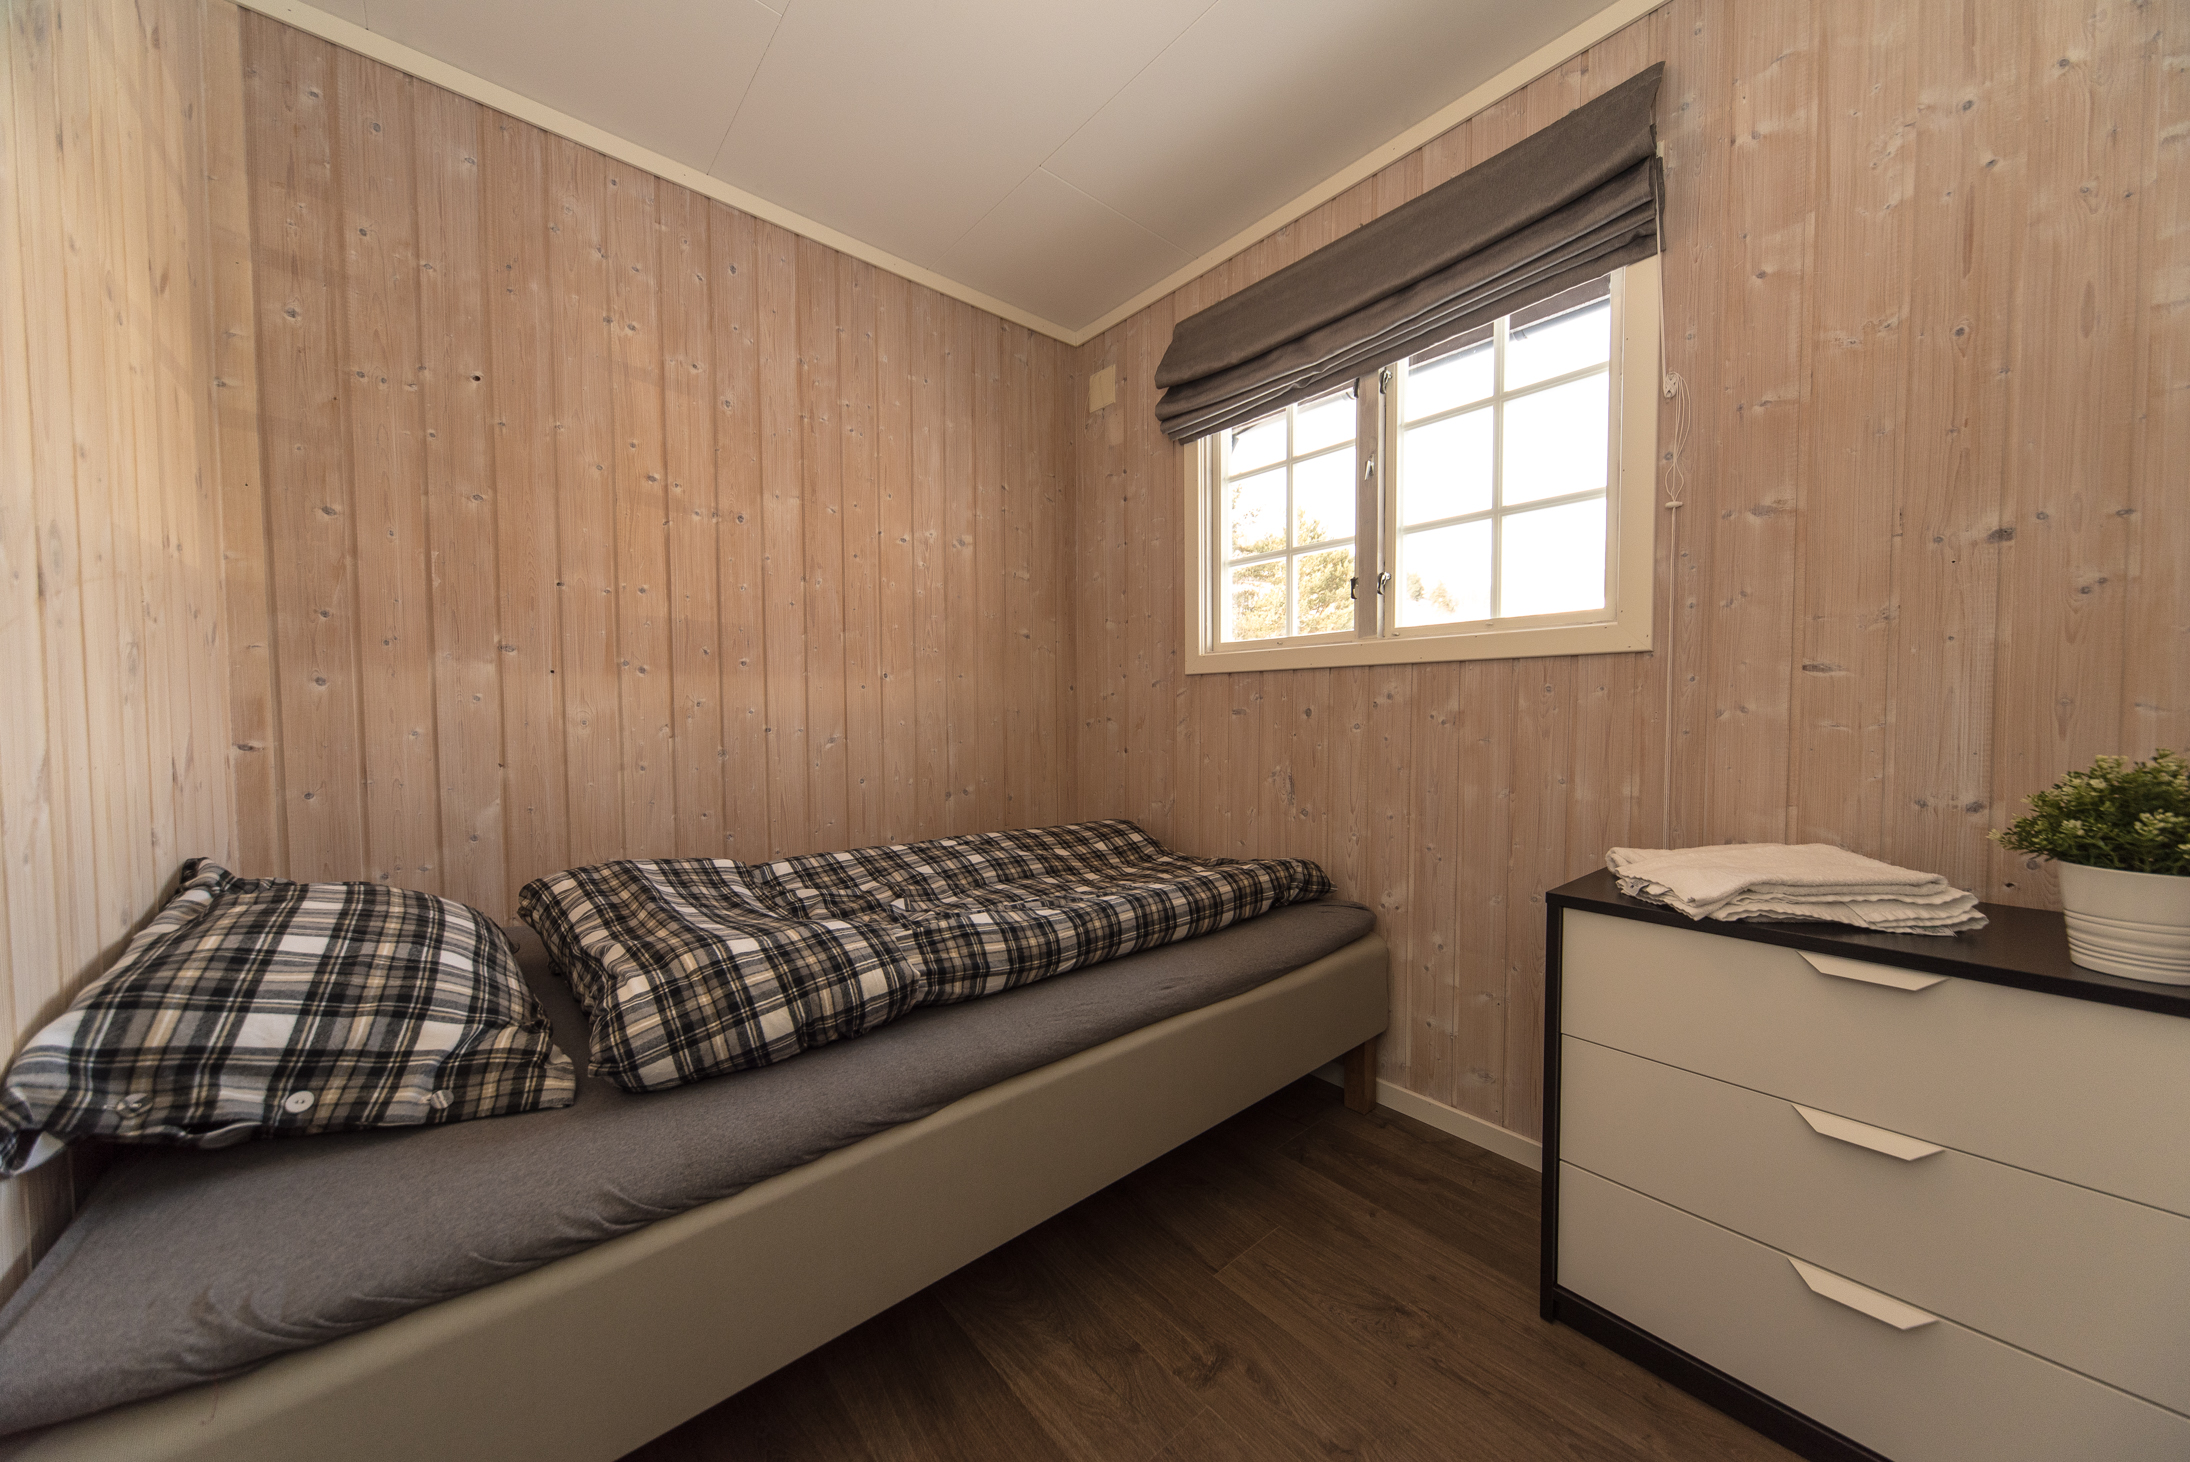 Bedroom with 120 cm wide bed